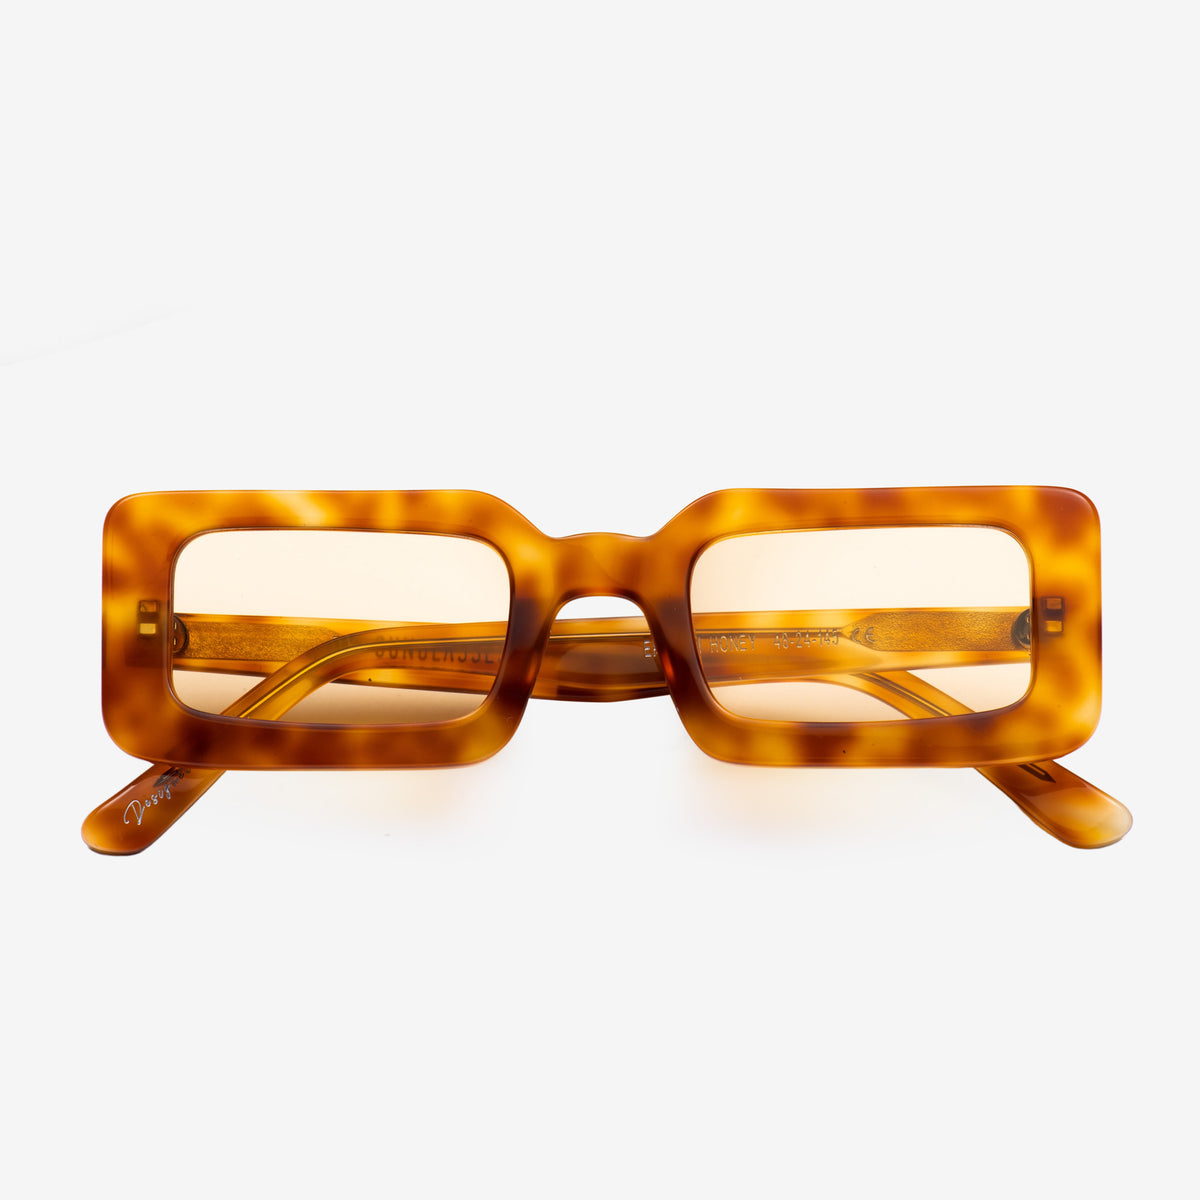 De-sunglasses| Epsilon honey | Sunglasses for men and women